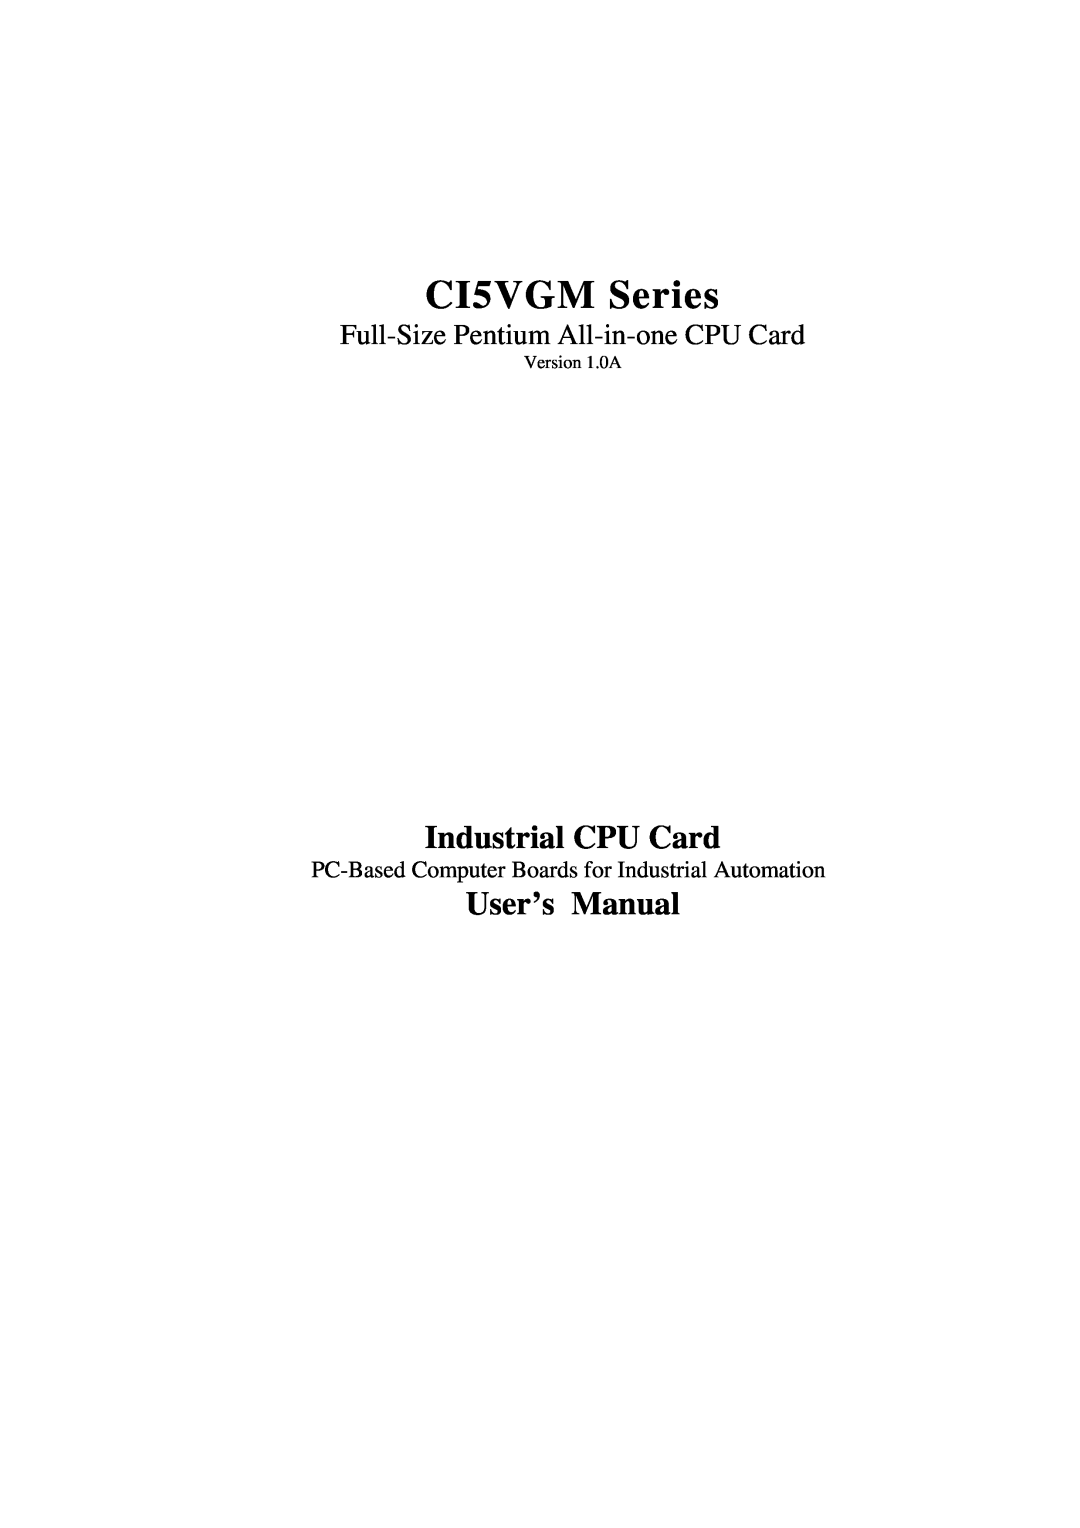 IBM CI5VGM Series user manual Industrial CPU Card, User’s Manual, Full-Size Pentium All-in-one CPU Card 